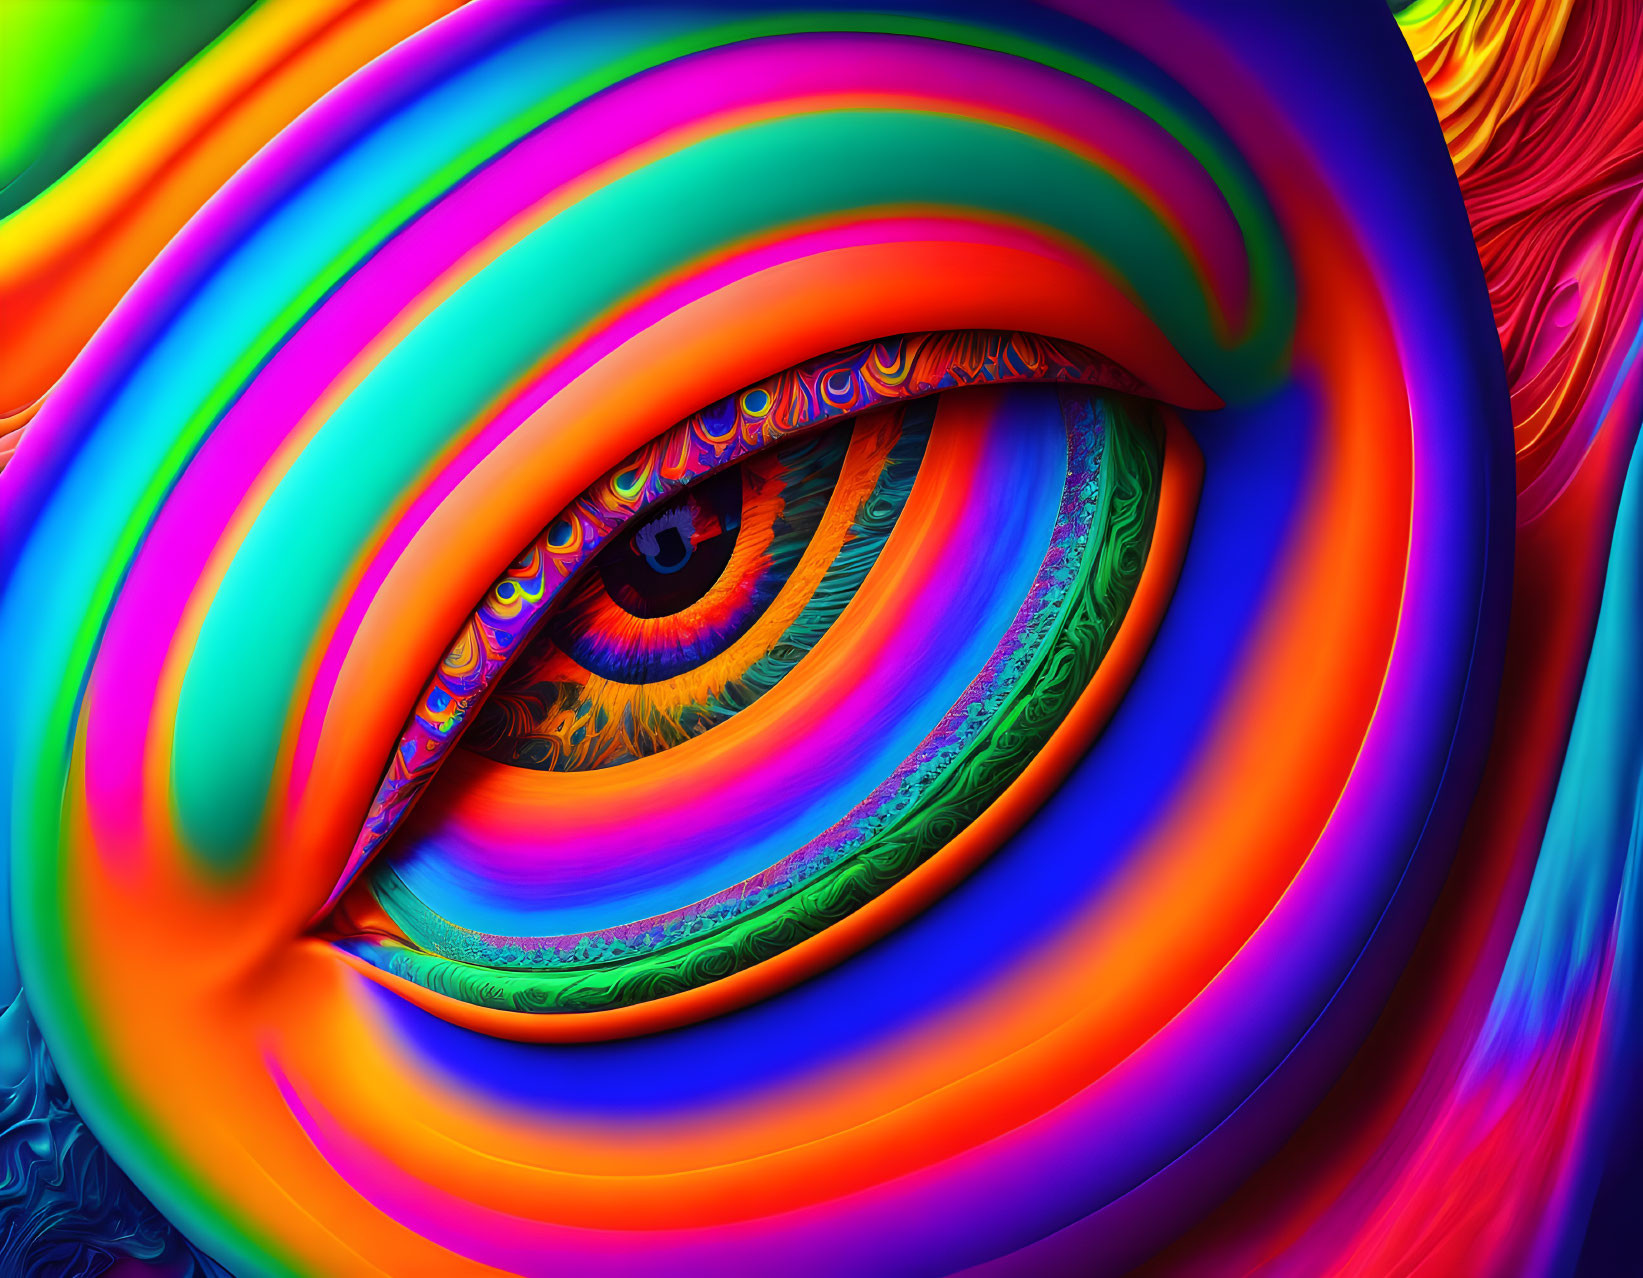 Colorful Digital Artwork: Eye in Psychedelic Rainbow Patterns